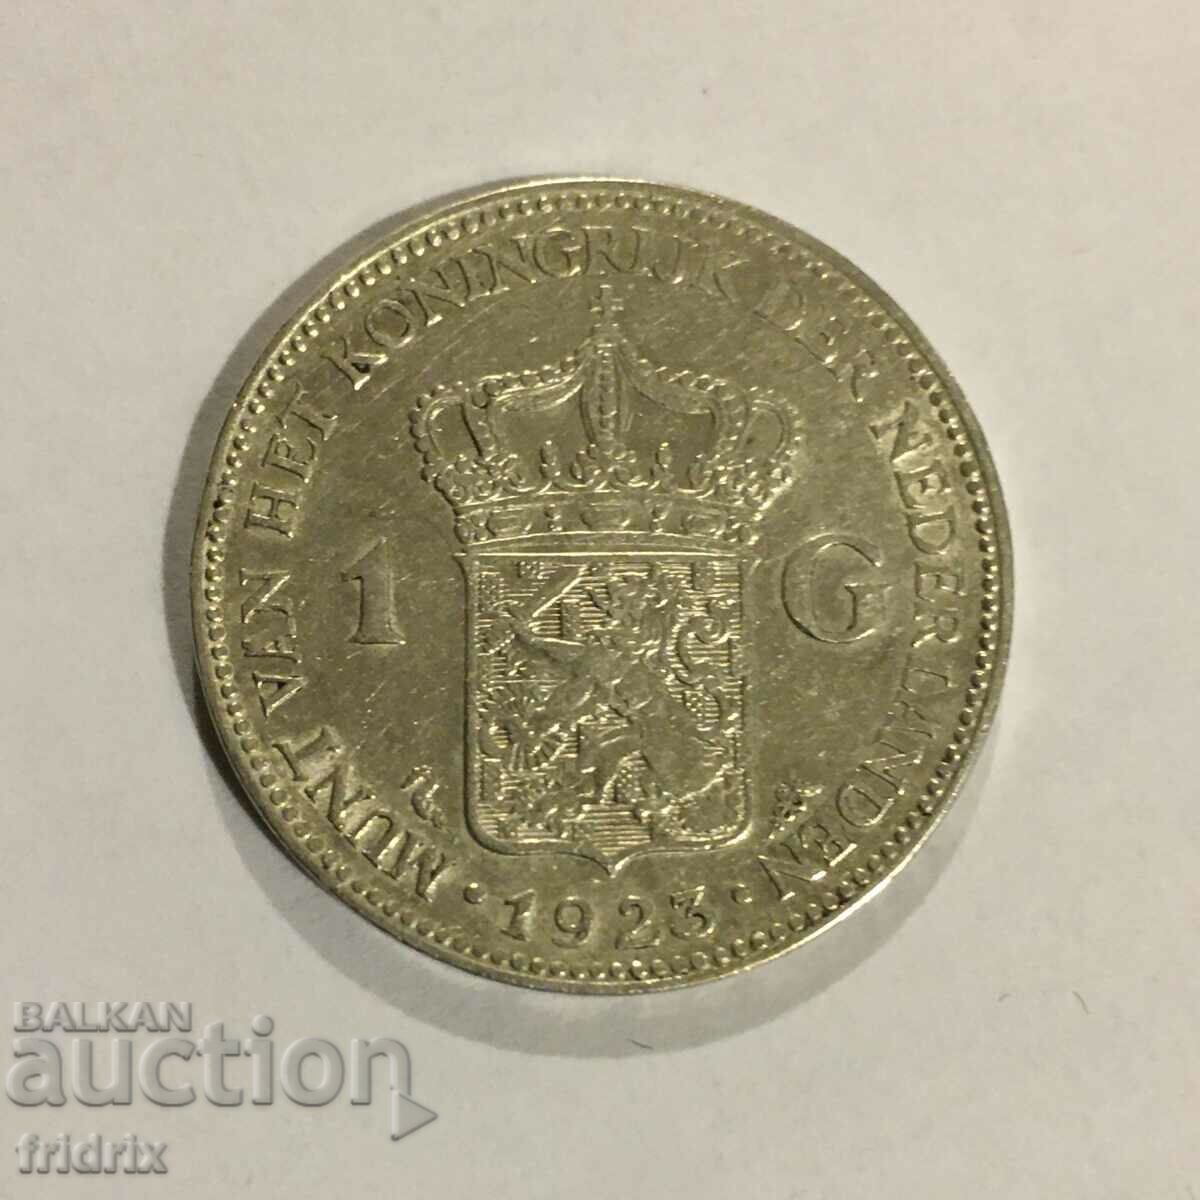 Netherlands 1 gulden 1923 / Netherlands 1 gulden 1923